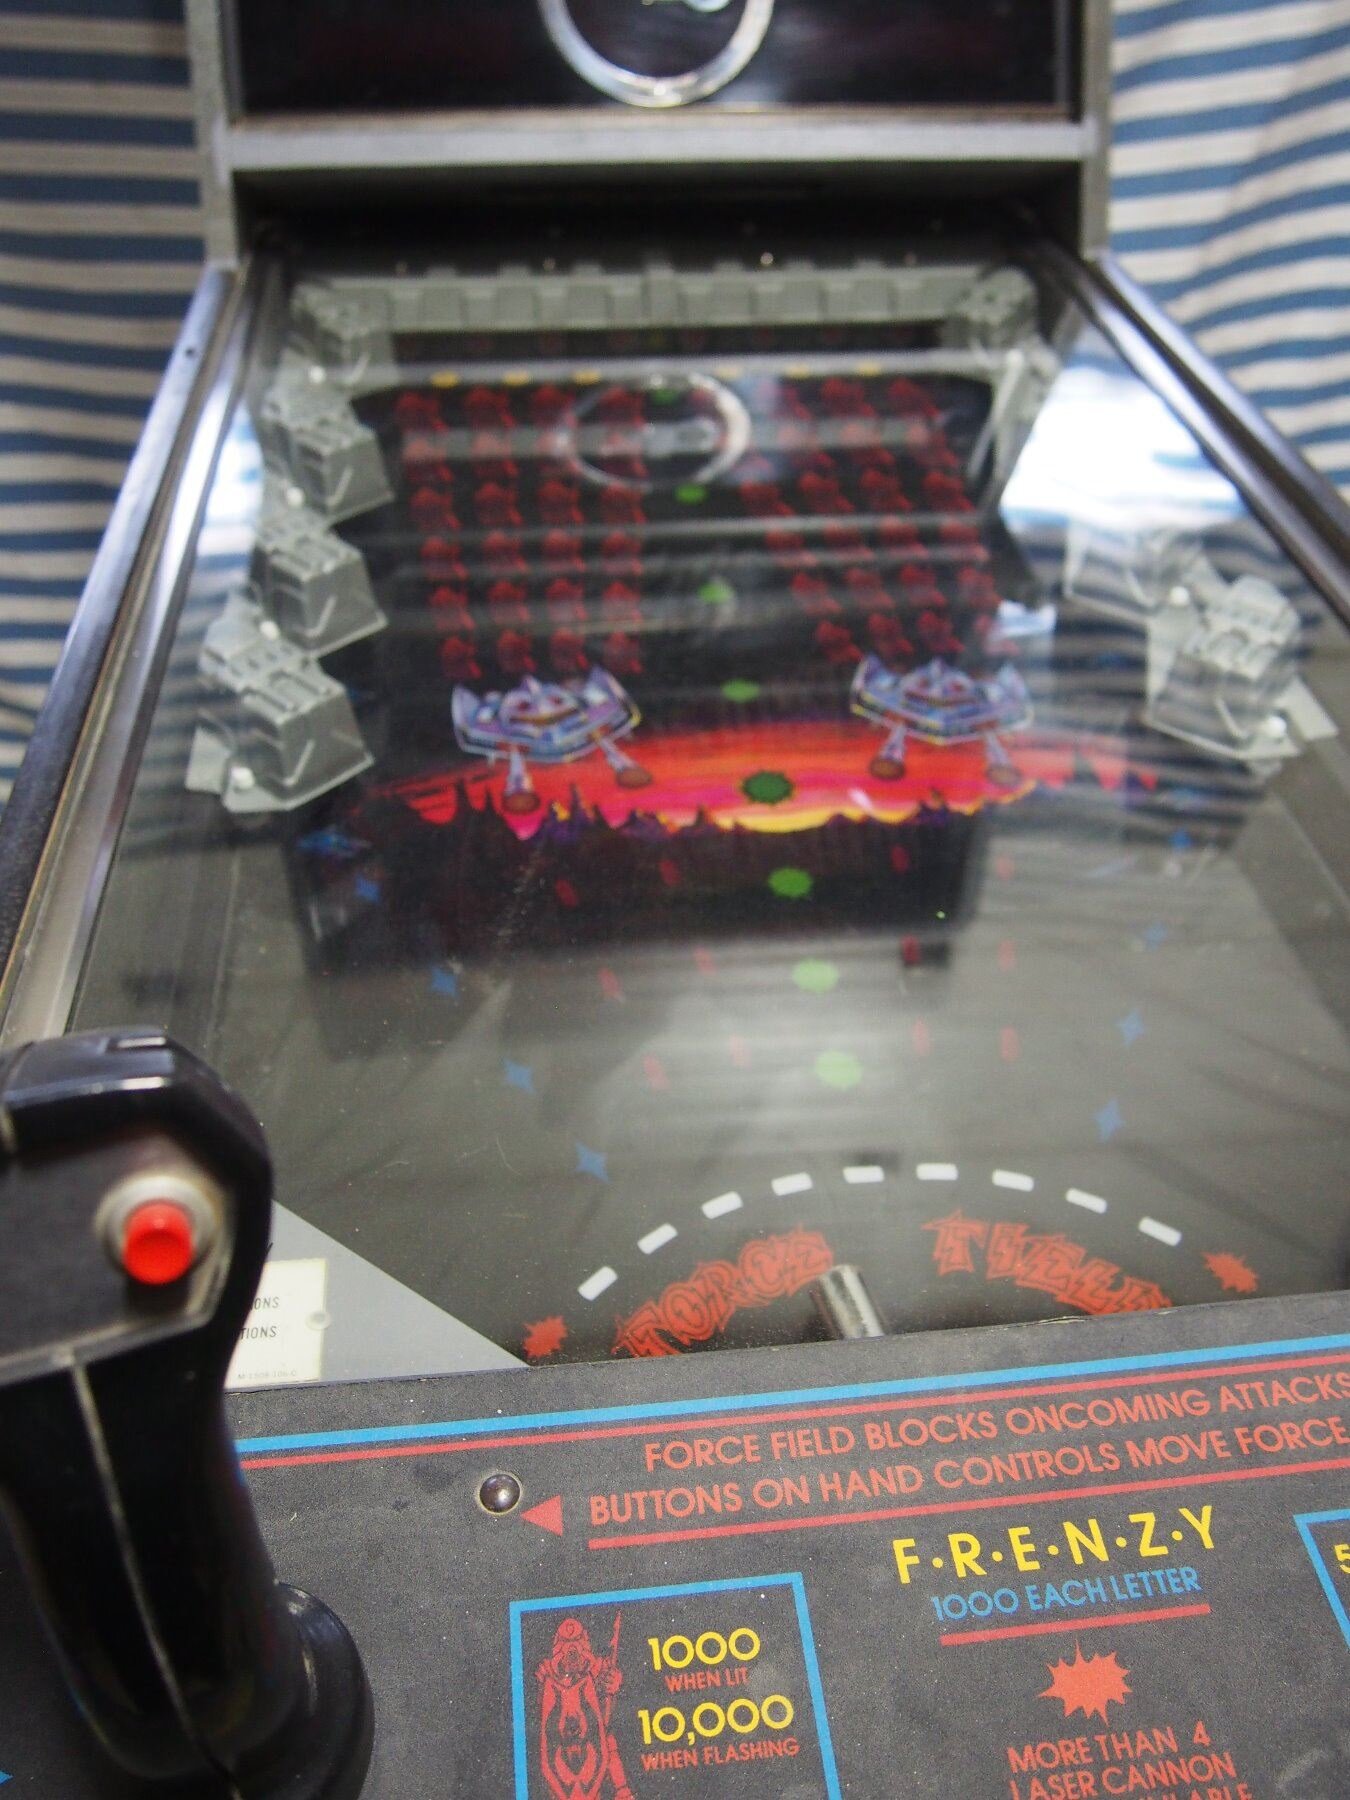 Pinball Machines, Arcades Games, and More 